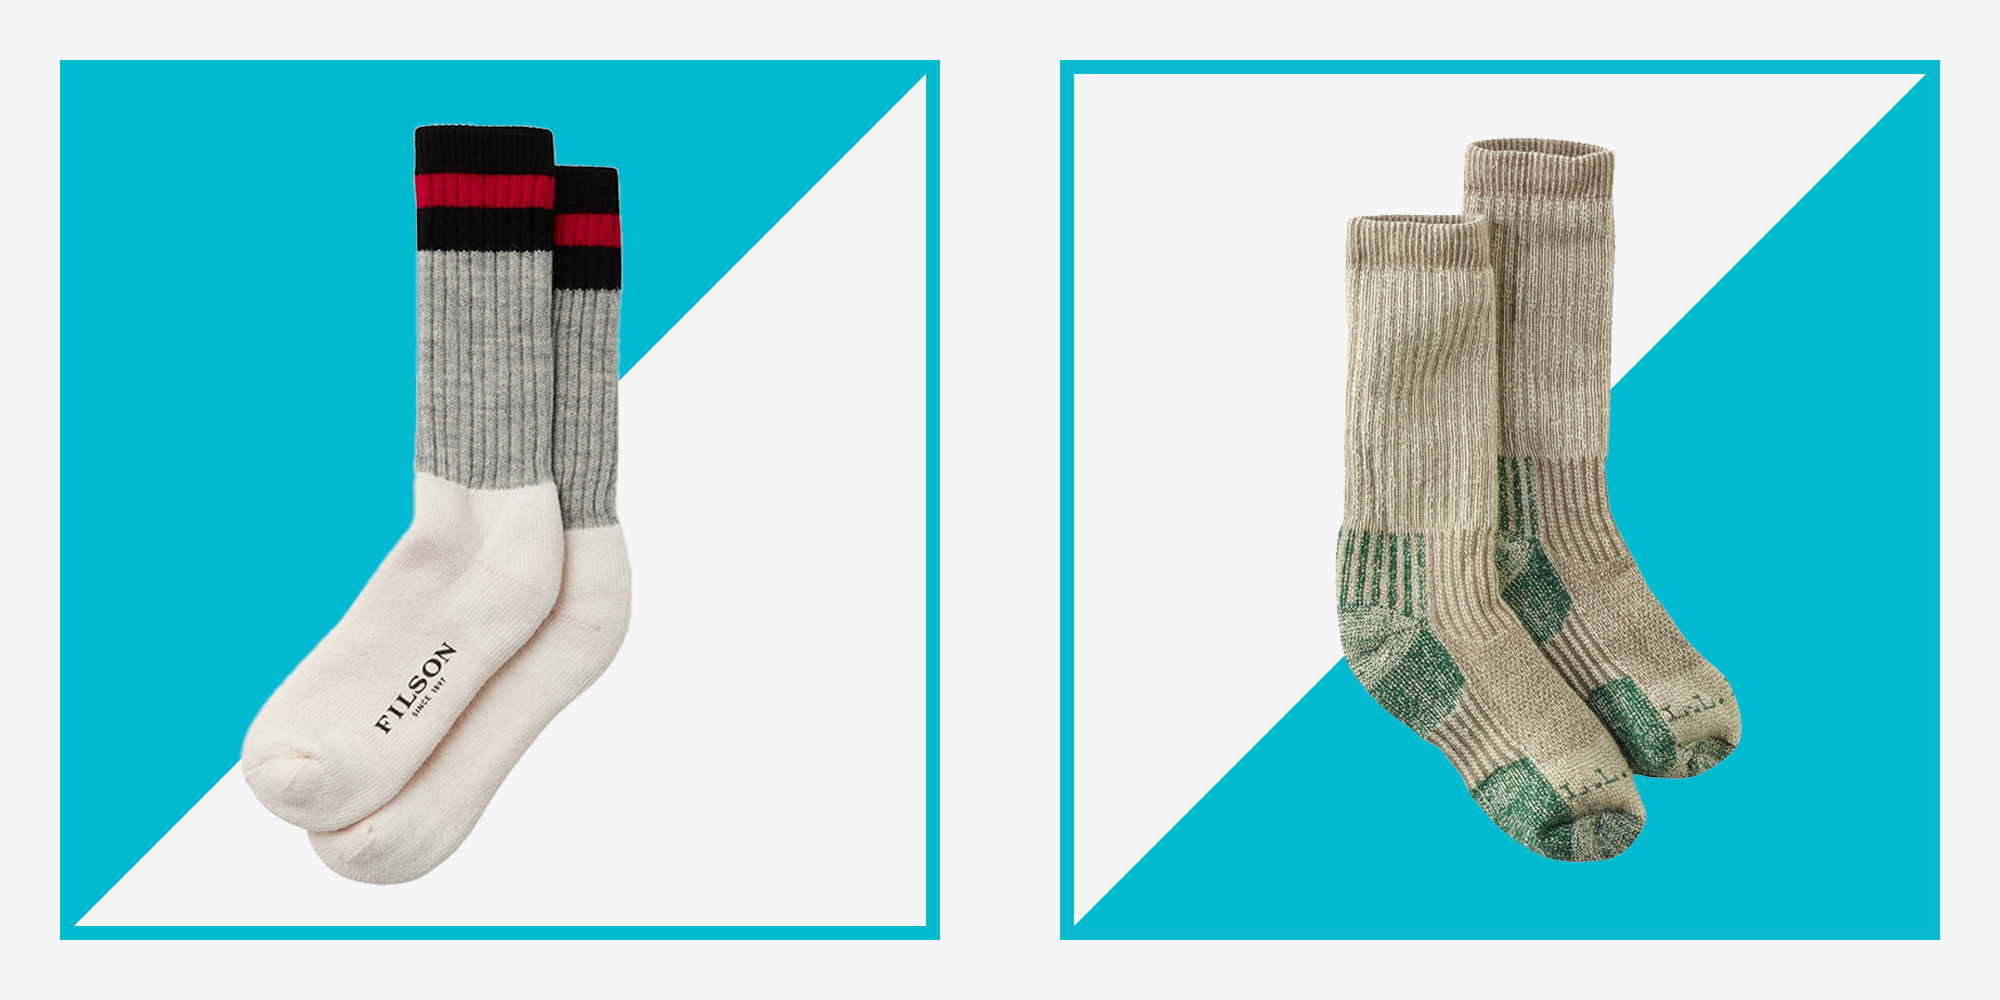 The warmest winter socks for winter